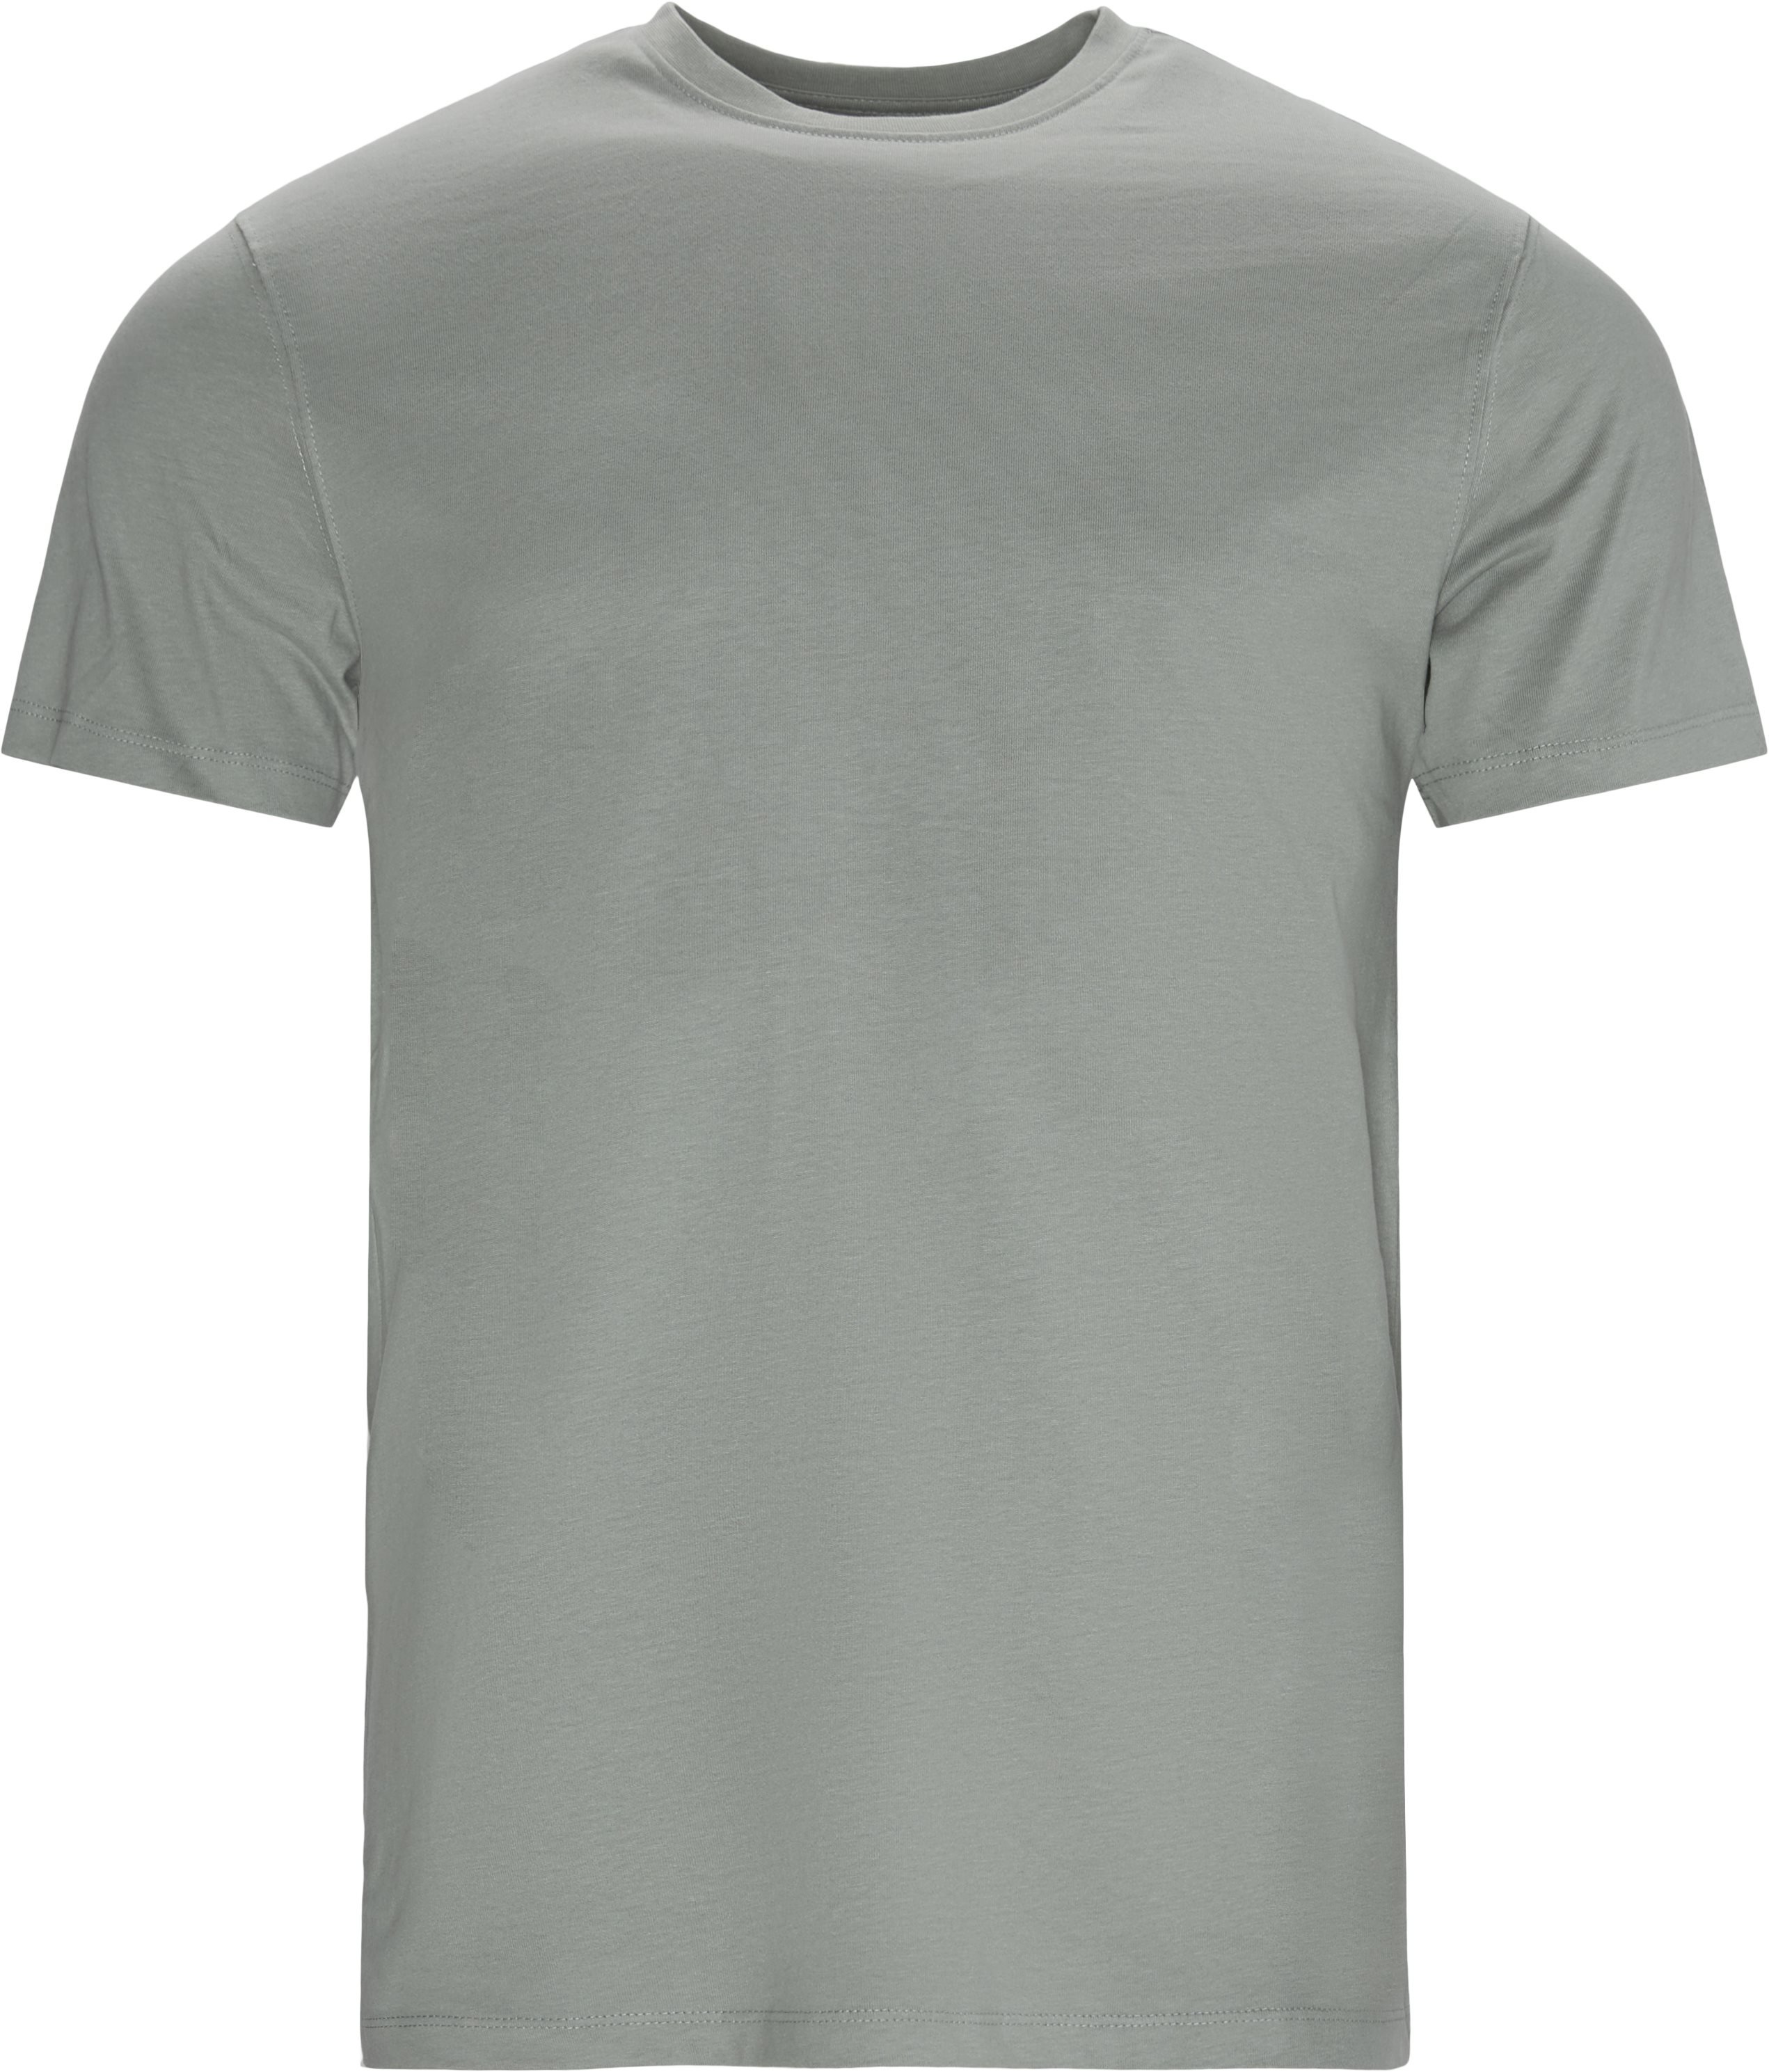 Brandon Crew Neck Tee - T-shirts - Regular fit - Blue